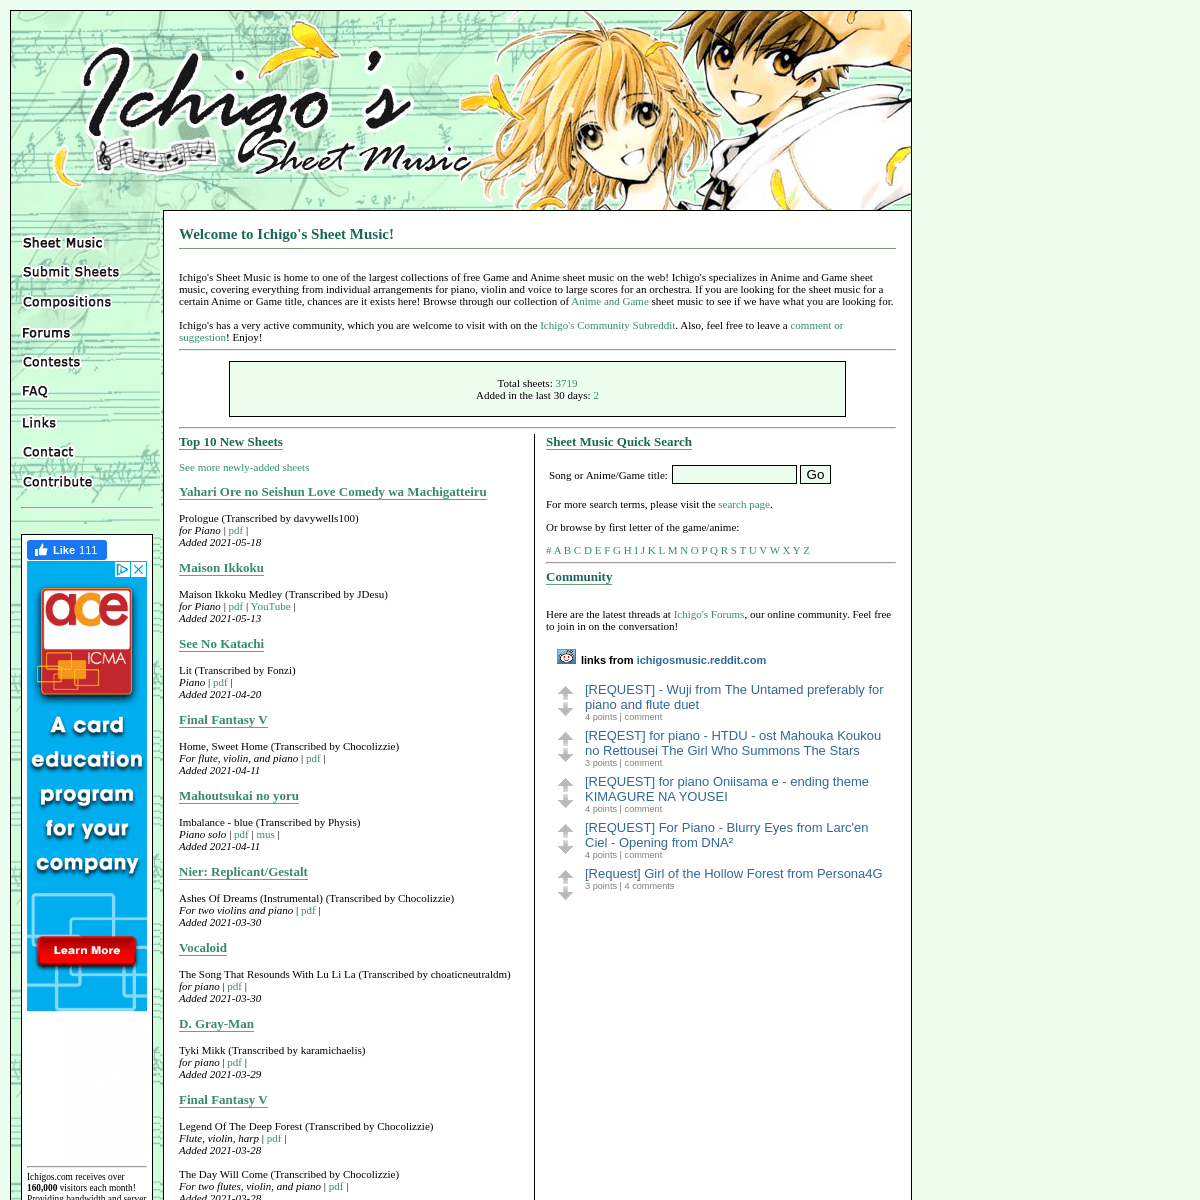 A complete backup of https://ichigos.com